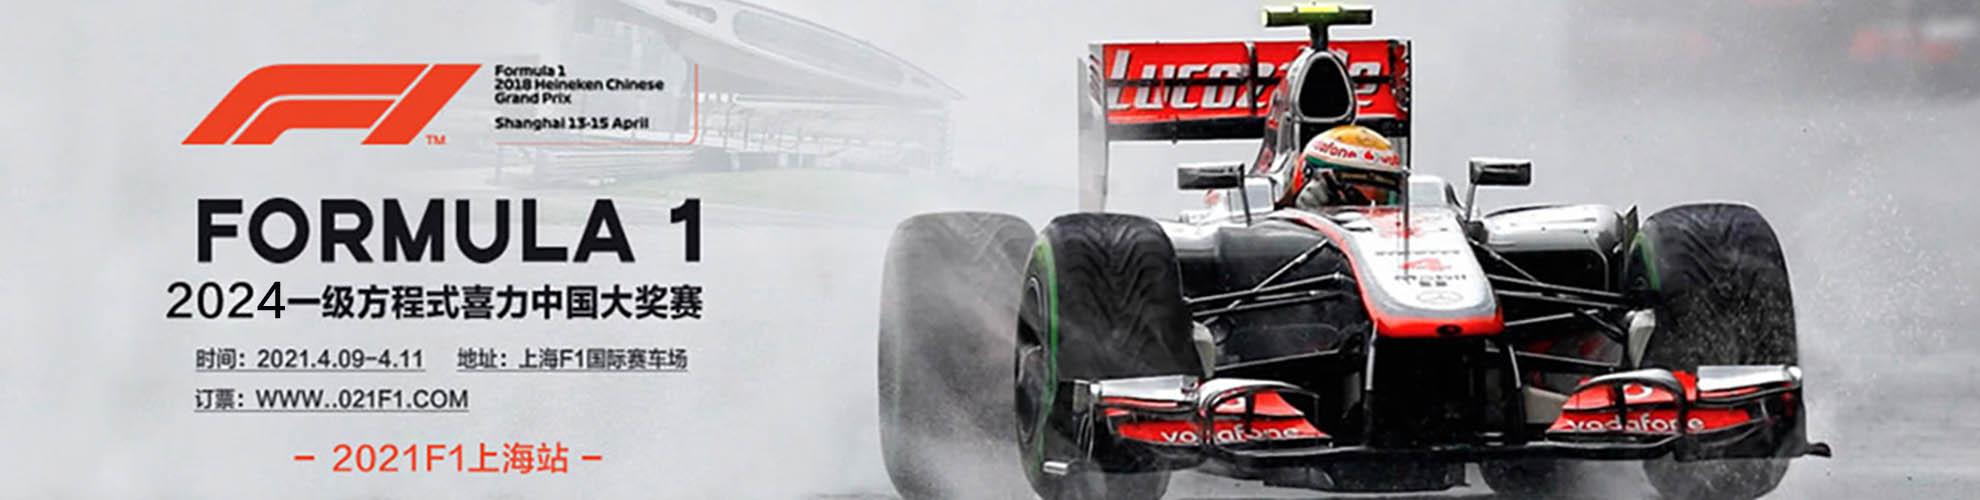 Carrera circuit de course - Go Formula Racing Track Demo & Review Formule 1  circuit de course 